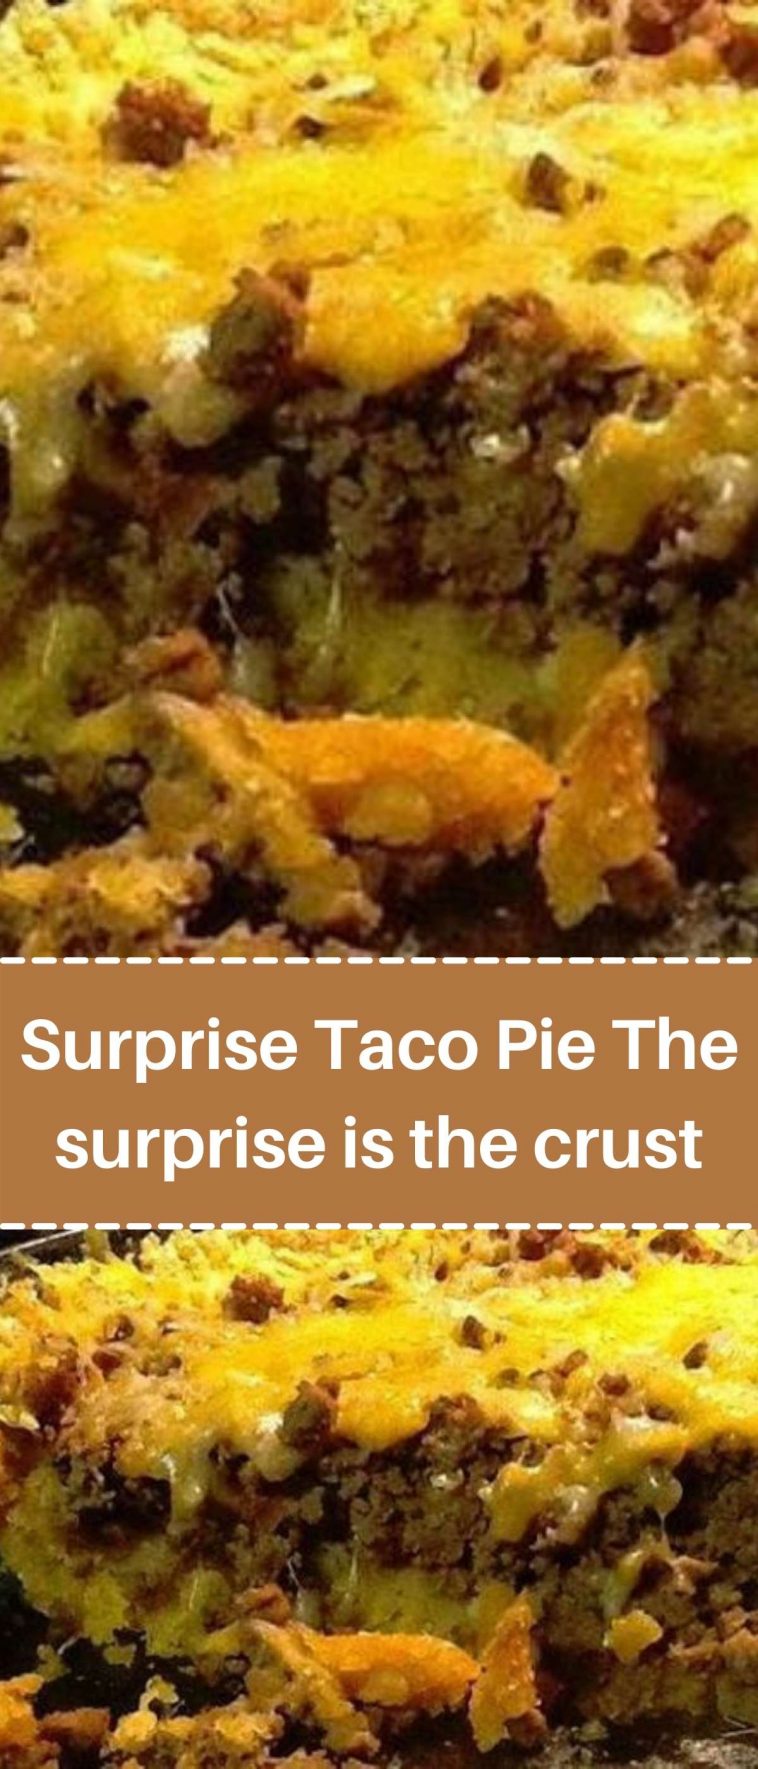 Surprise Taco Pie The surprise is the crust